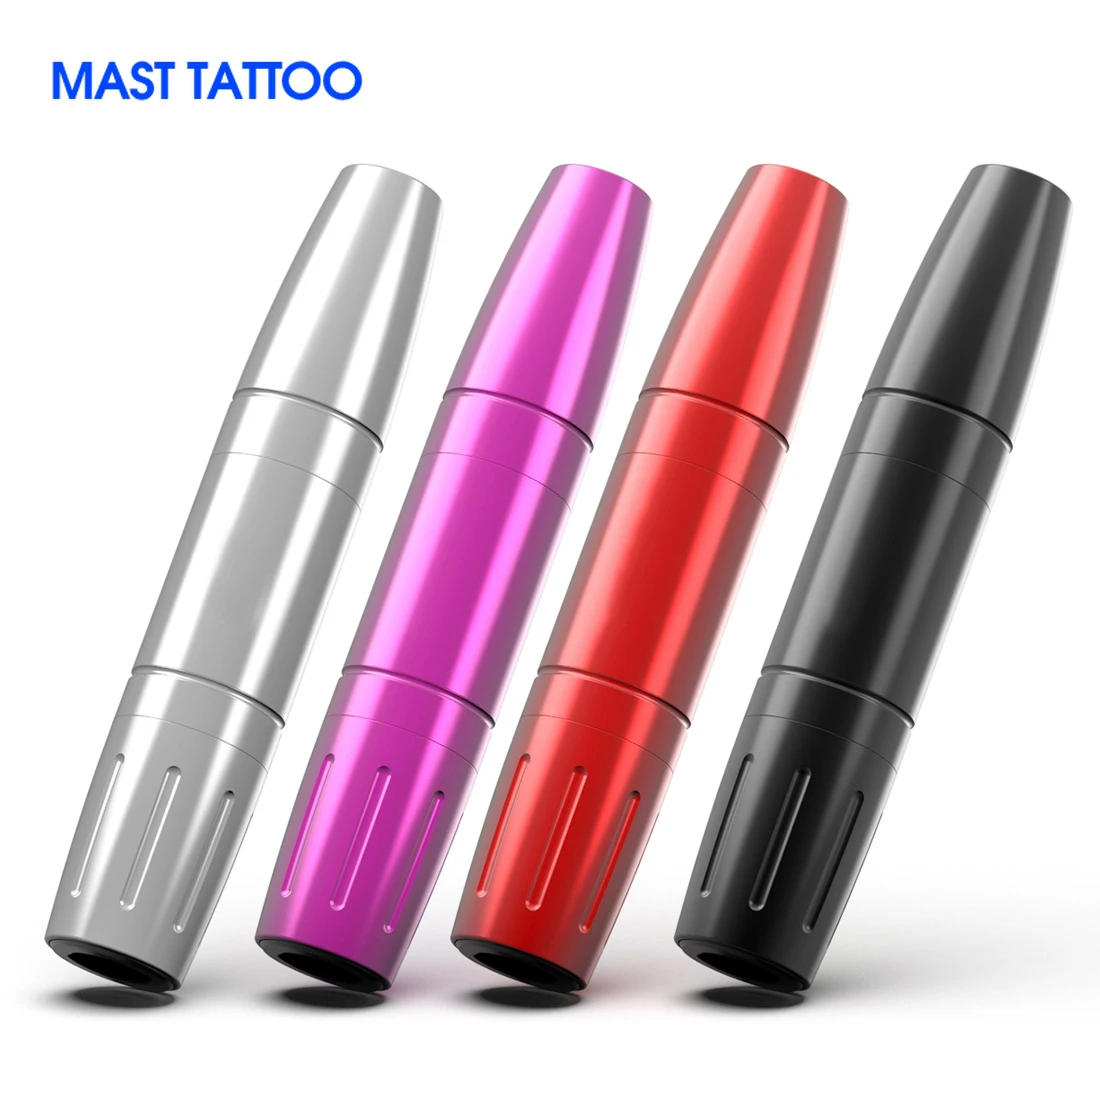 Mast Tattoo Magi New Powerful Eyebrows Lips and Scalp RCA Permanent Makeup Rotary Tattoo Gun Machine Pen Tattoo Cartridge Needle